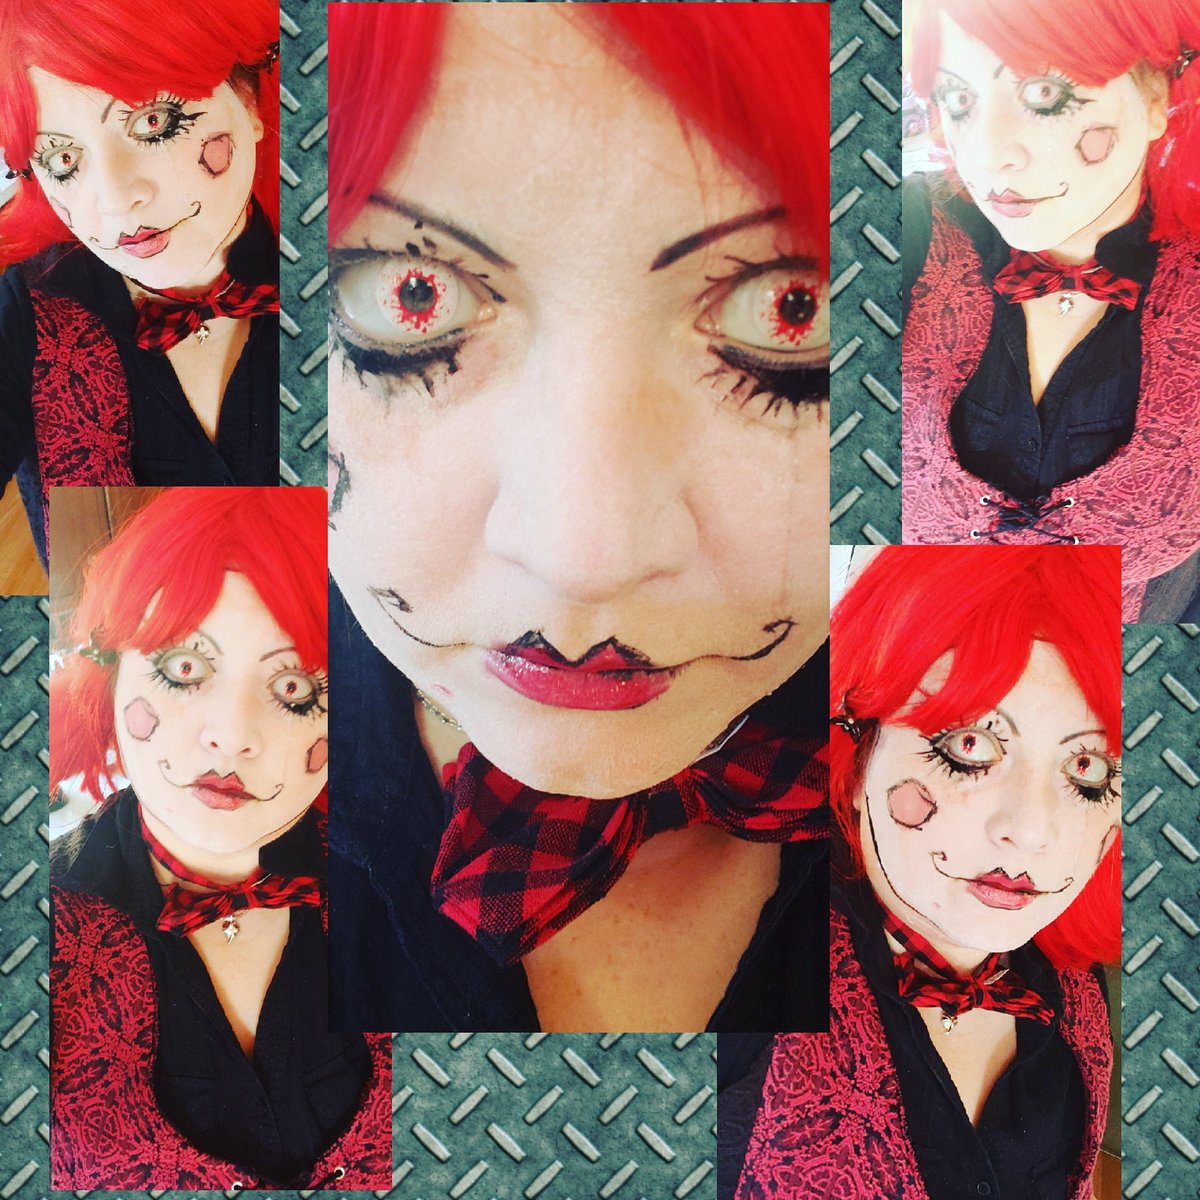 #cosplay #horror #creepydoll #dressup #coloredcontacts #facepaint #creepyfacepaint #makeupfun